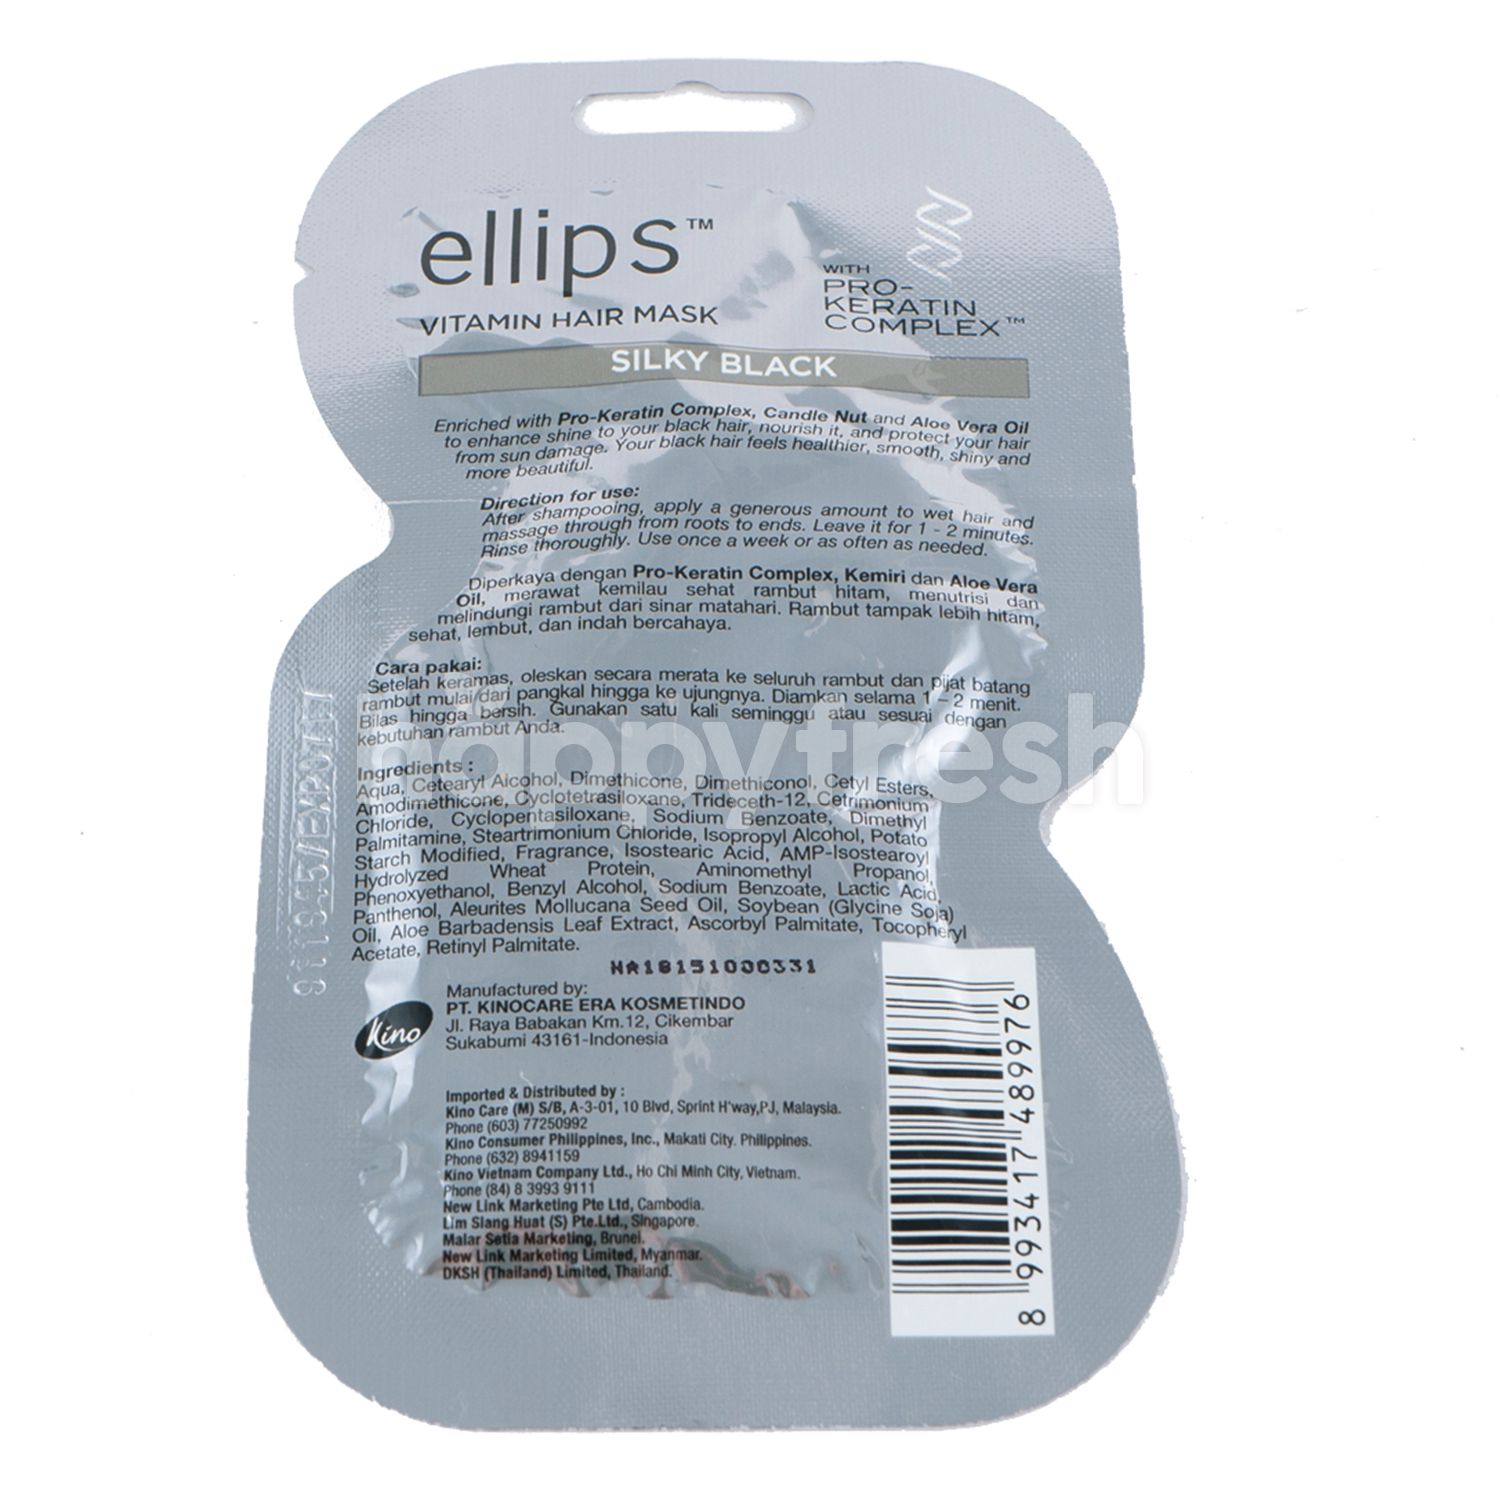 Jual Ellips Vitamin Hair Mask Silky Black di AEON - HappyFresh | HappyFresh